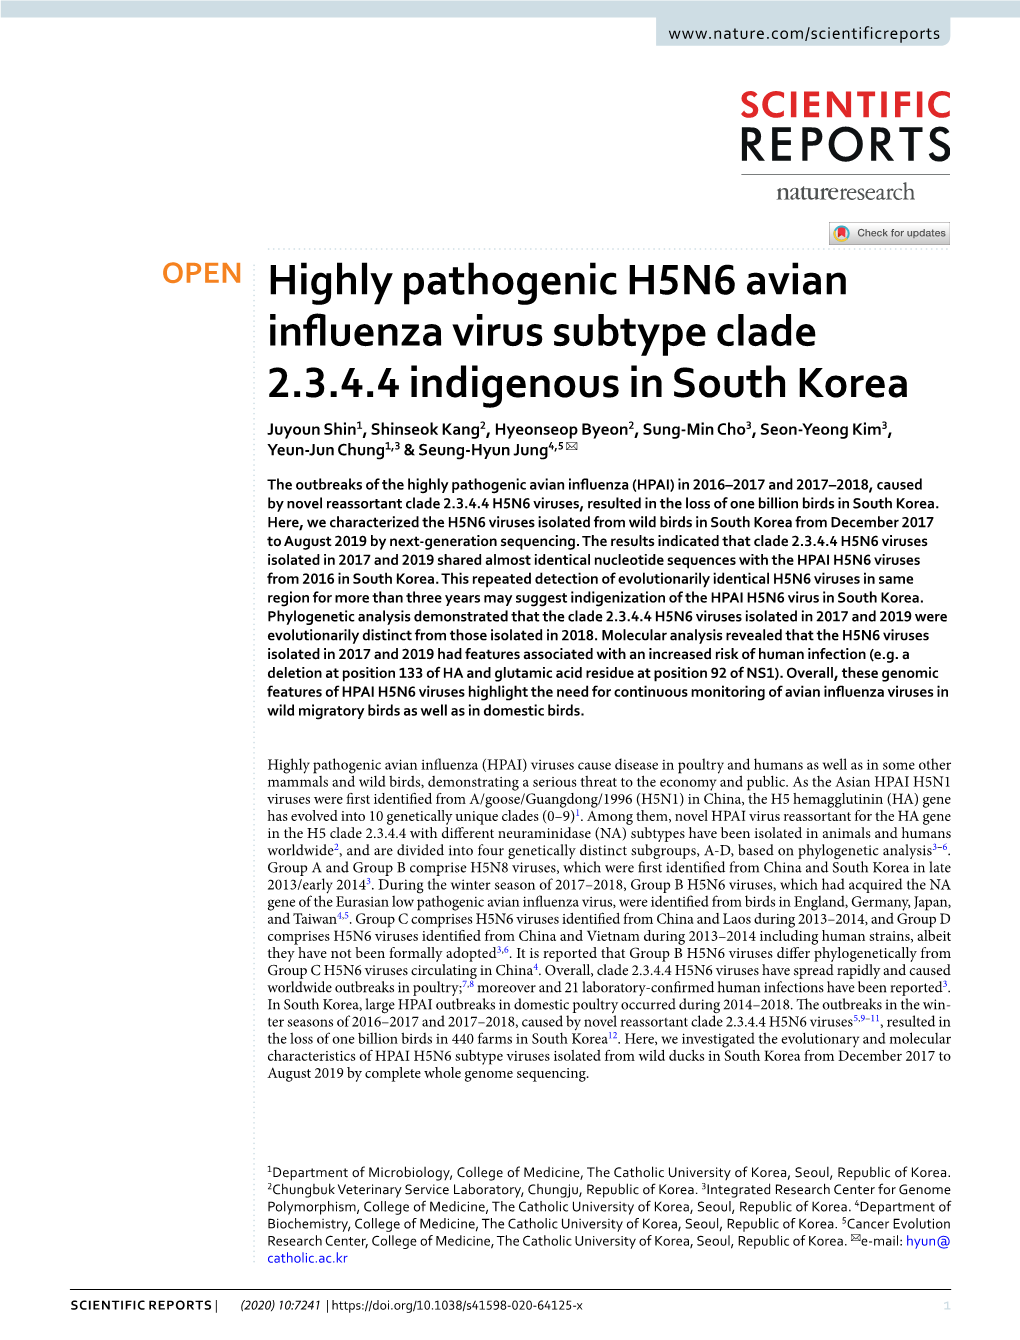 Highly Pathogenic H5N6 Avian Influenza Virus Subtype Clade 2.3